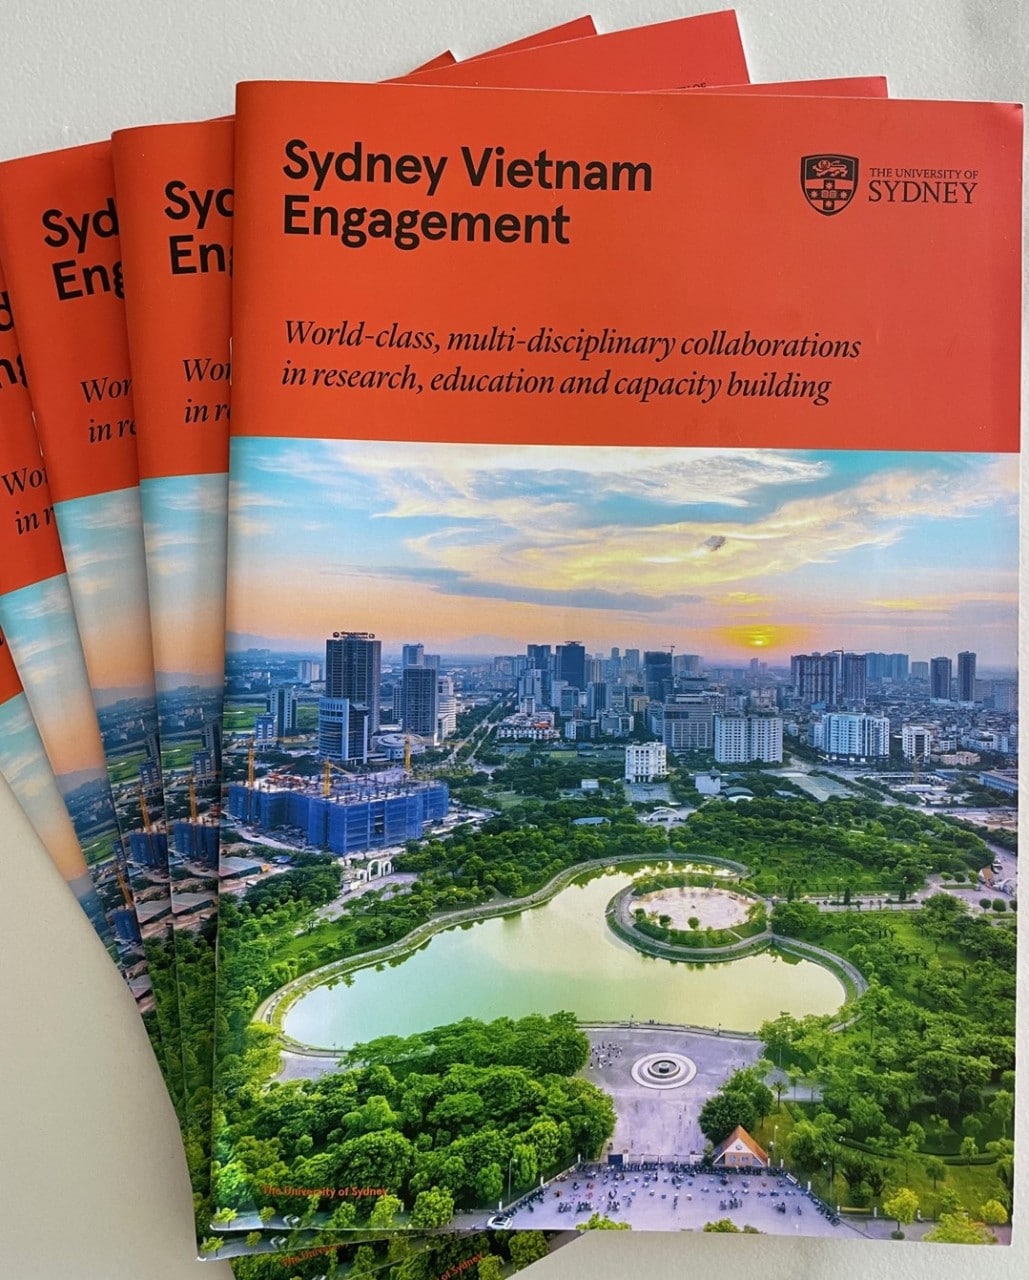 Sydney Vietnam Engagement booklet